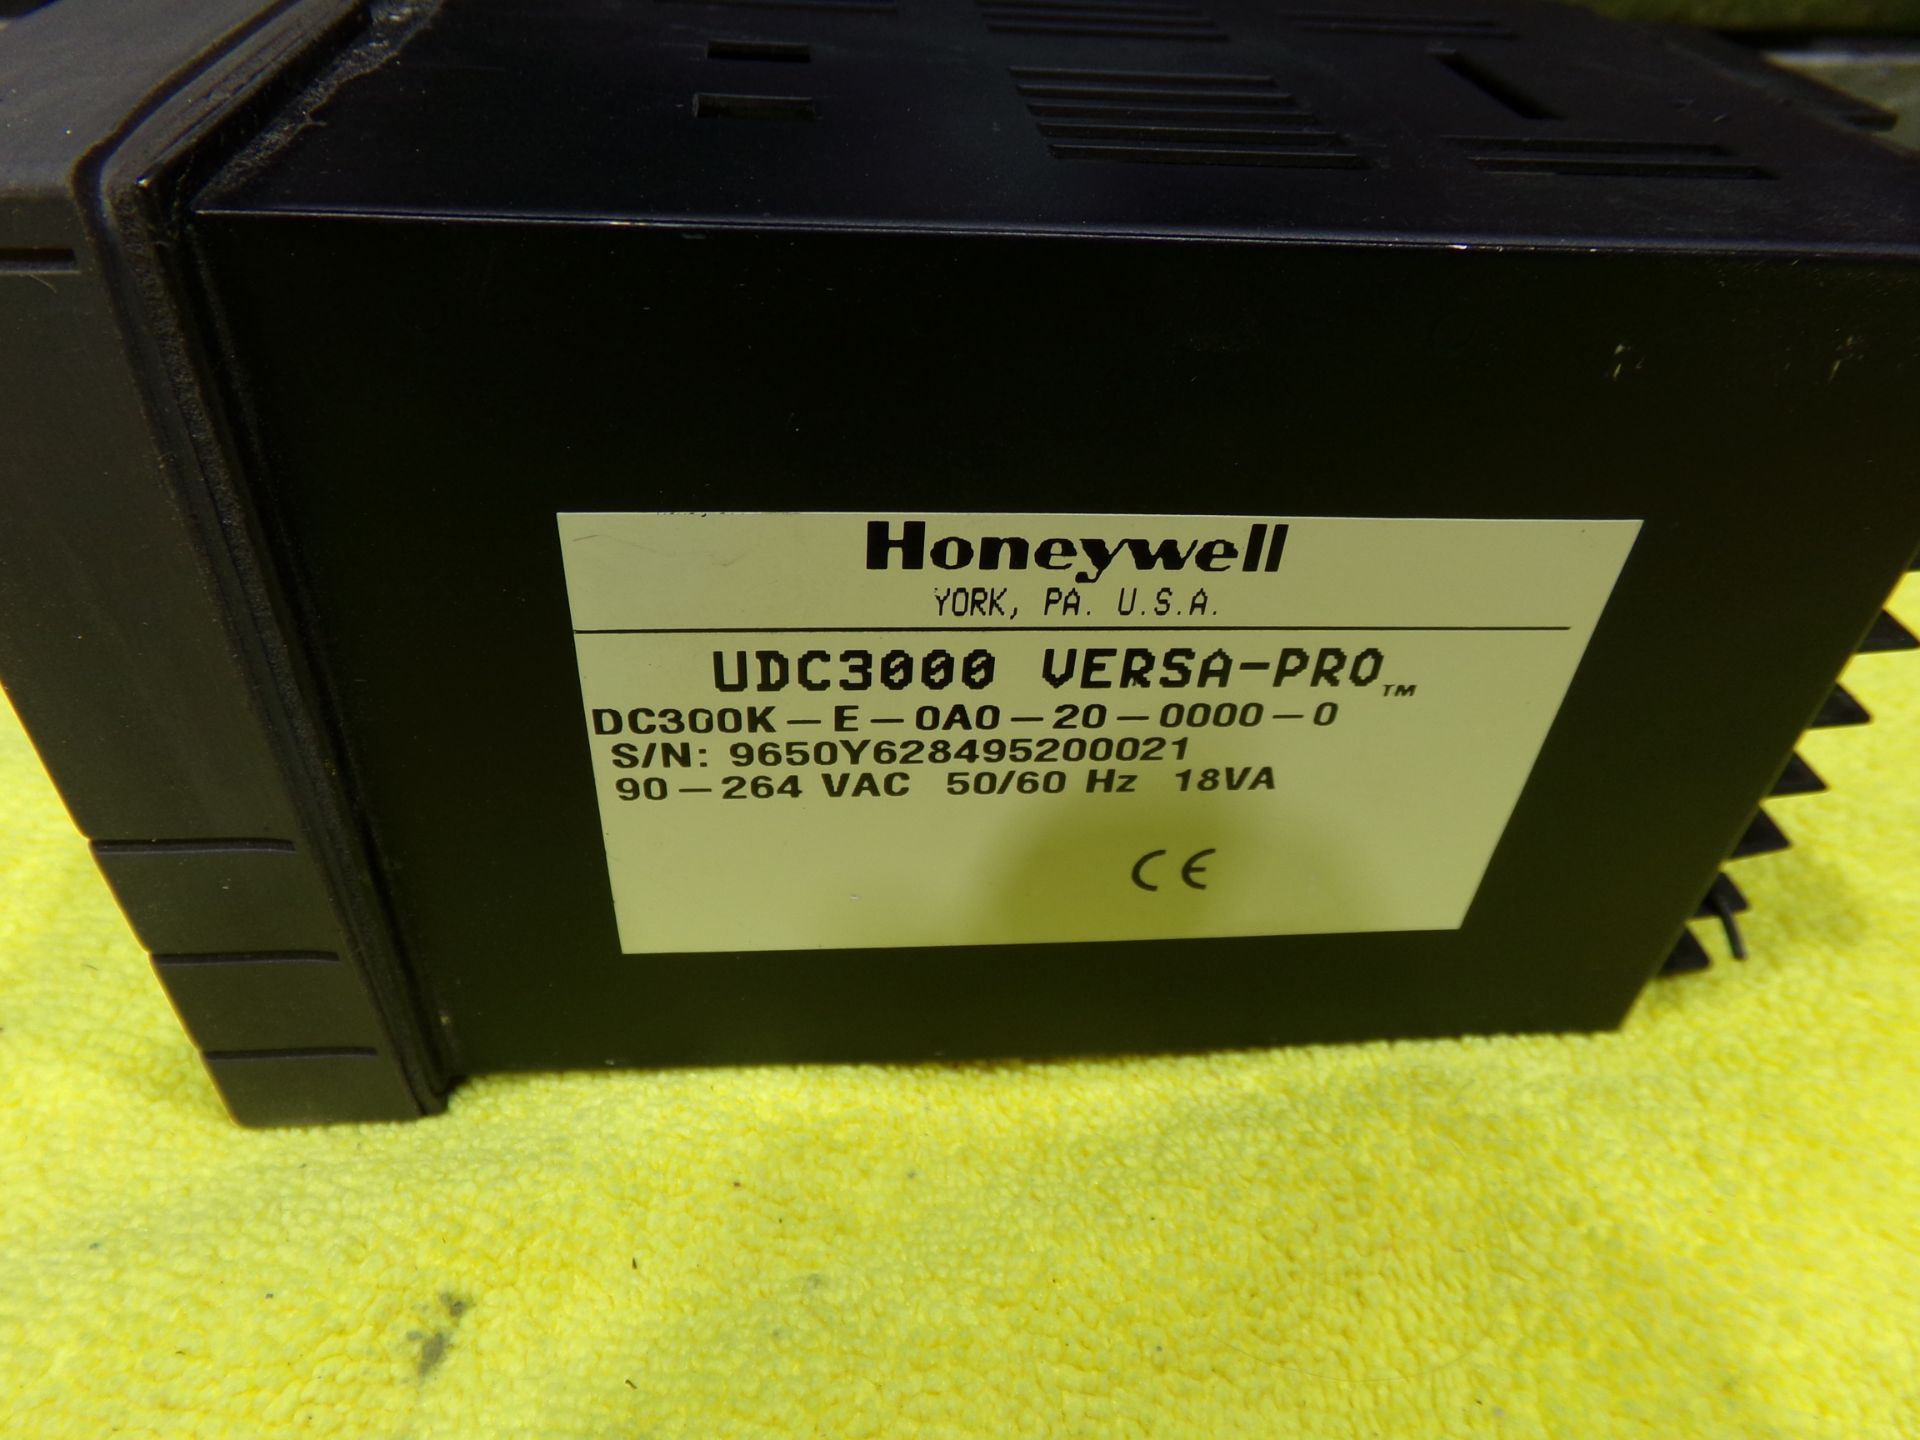 HONEYWELL DIGITAL CONTROLLER UDC3000 VERSA-PRO C300K-E-0A0-20-0000-0 90-264 VAC 50/60HZ 18VA LOT - Image 8 of 9